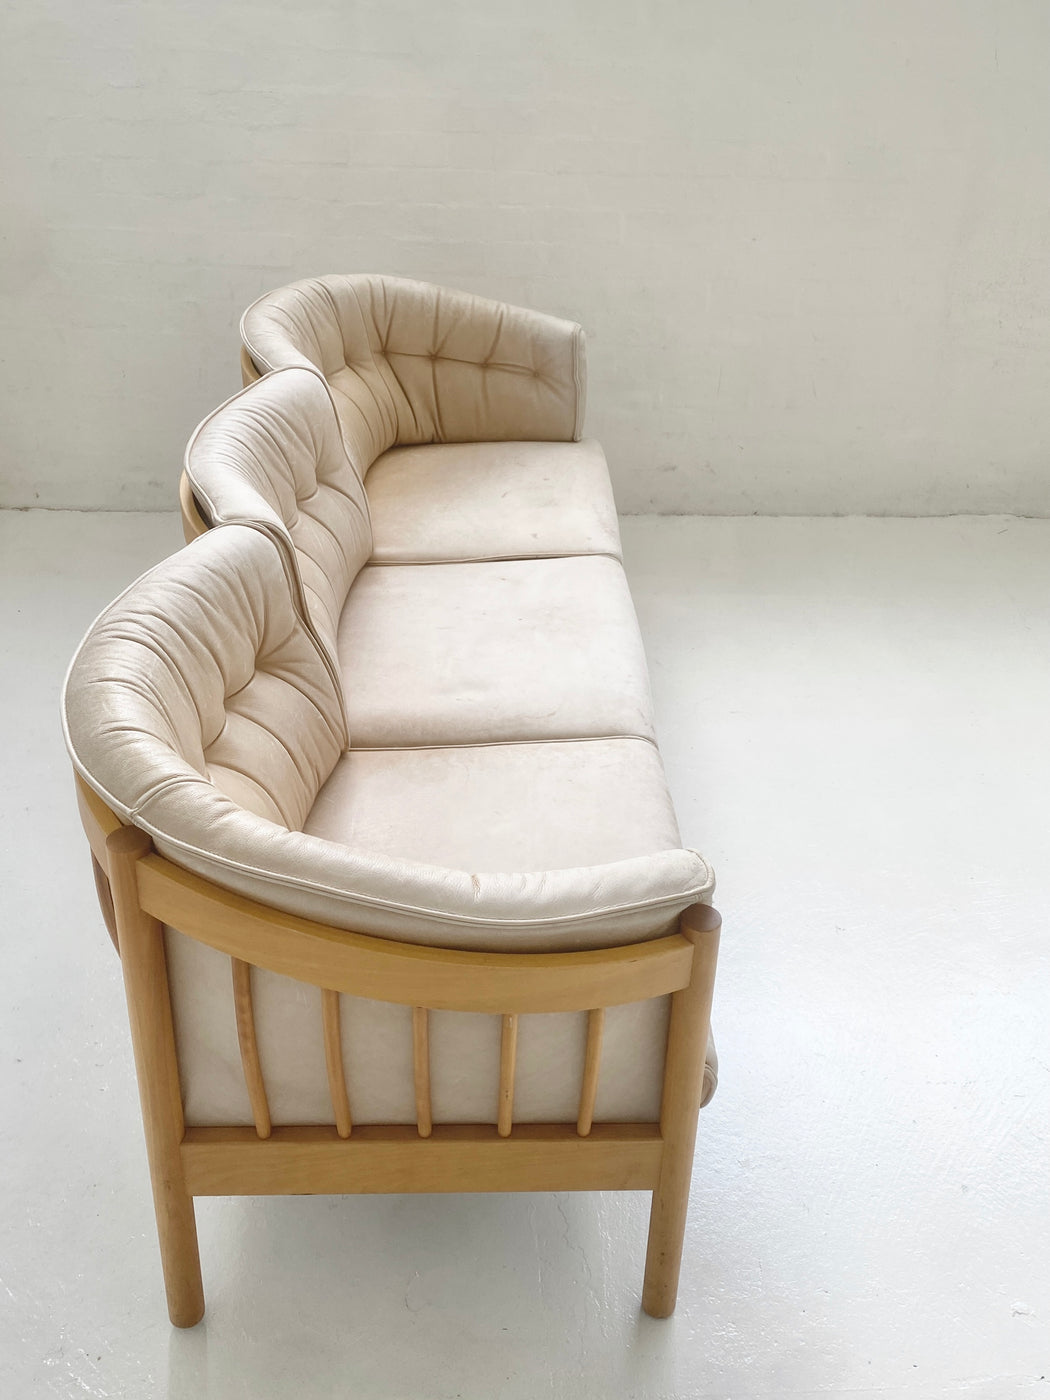 Nielaus Møbler Model 'N100' Leather Sofa